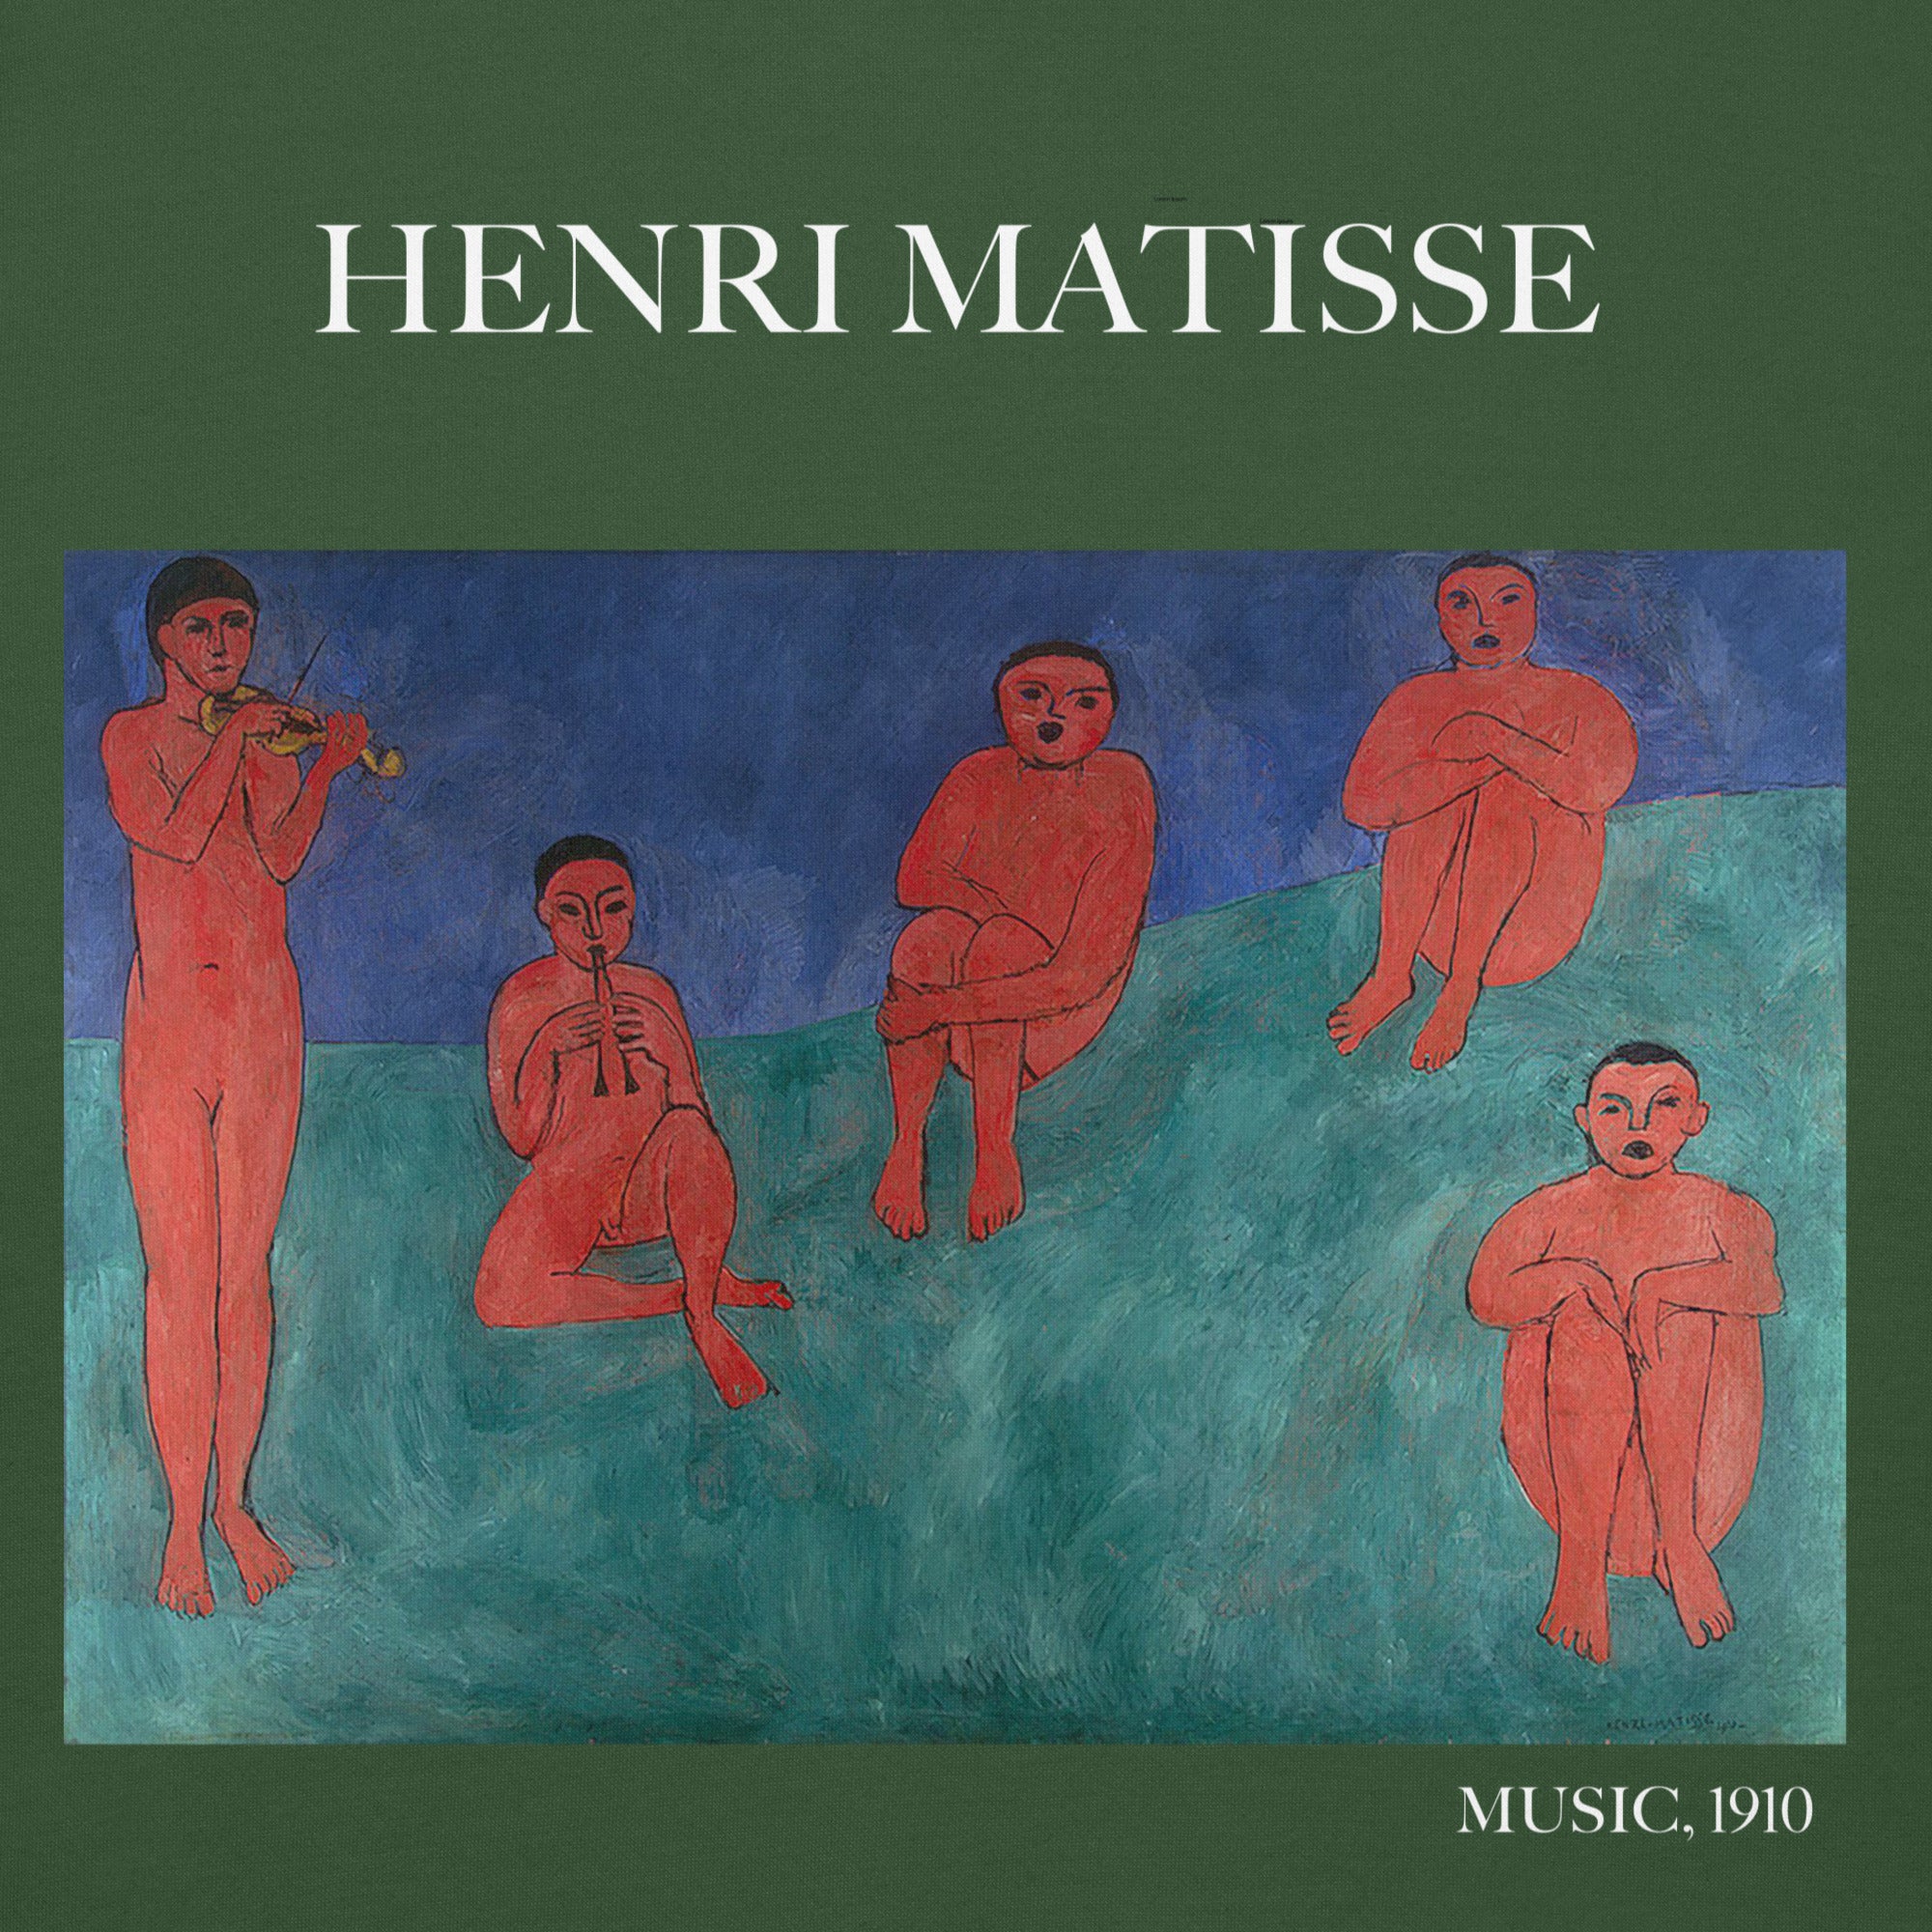 Henri Matisse 'Music' Famous Painting Hoodie | Unisex Premium Art Hoodie